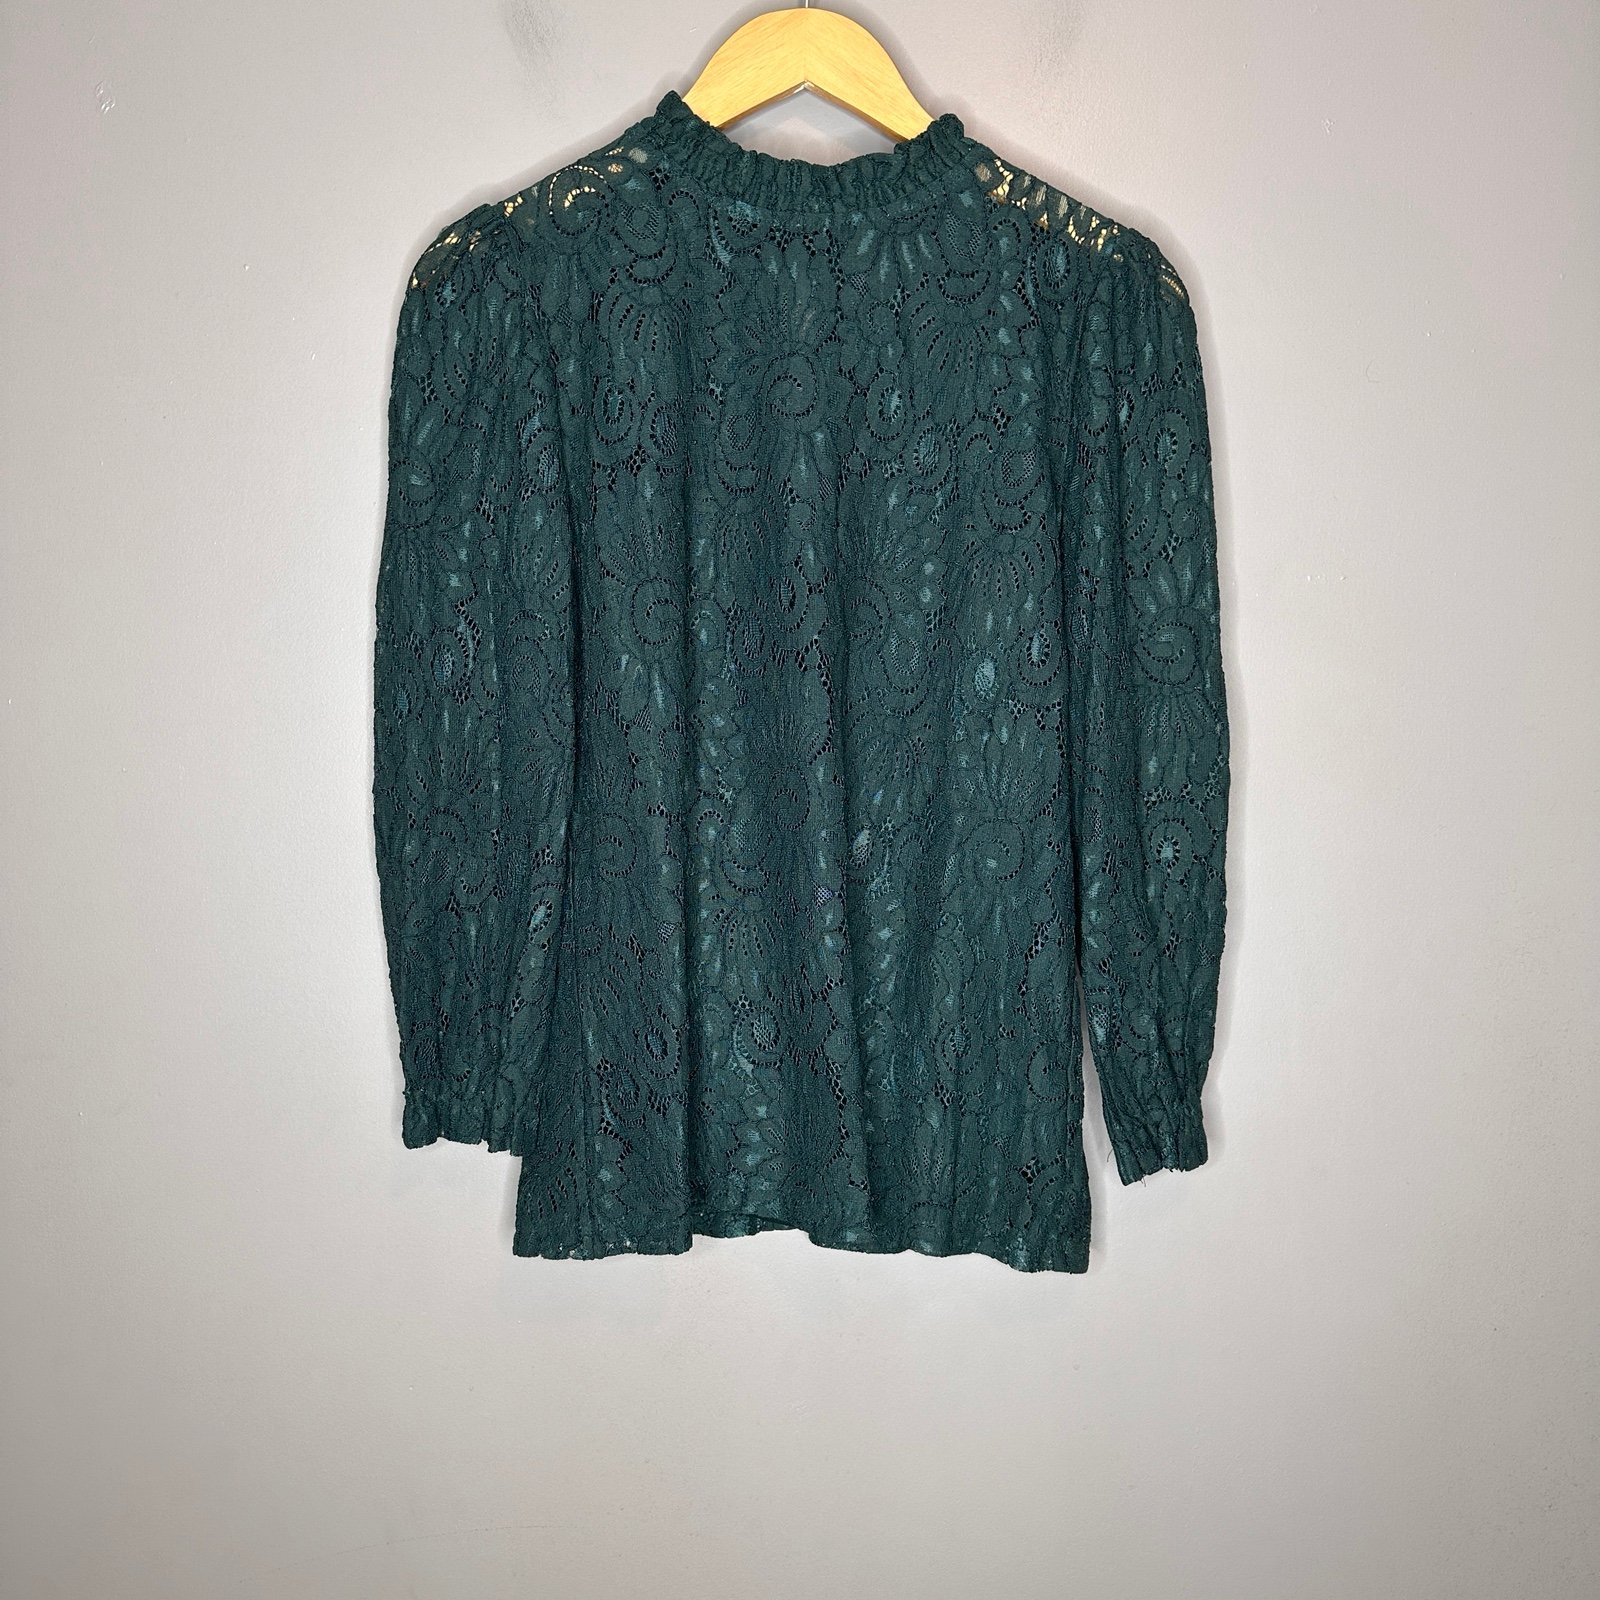 Latest  Adiva Lace green long sleeve high neck blouse JEMm2HPYS best sale